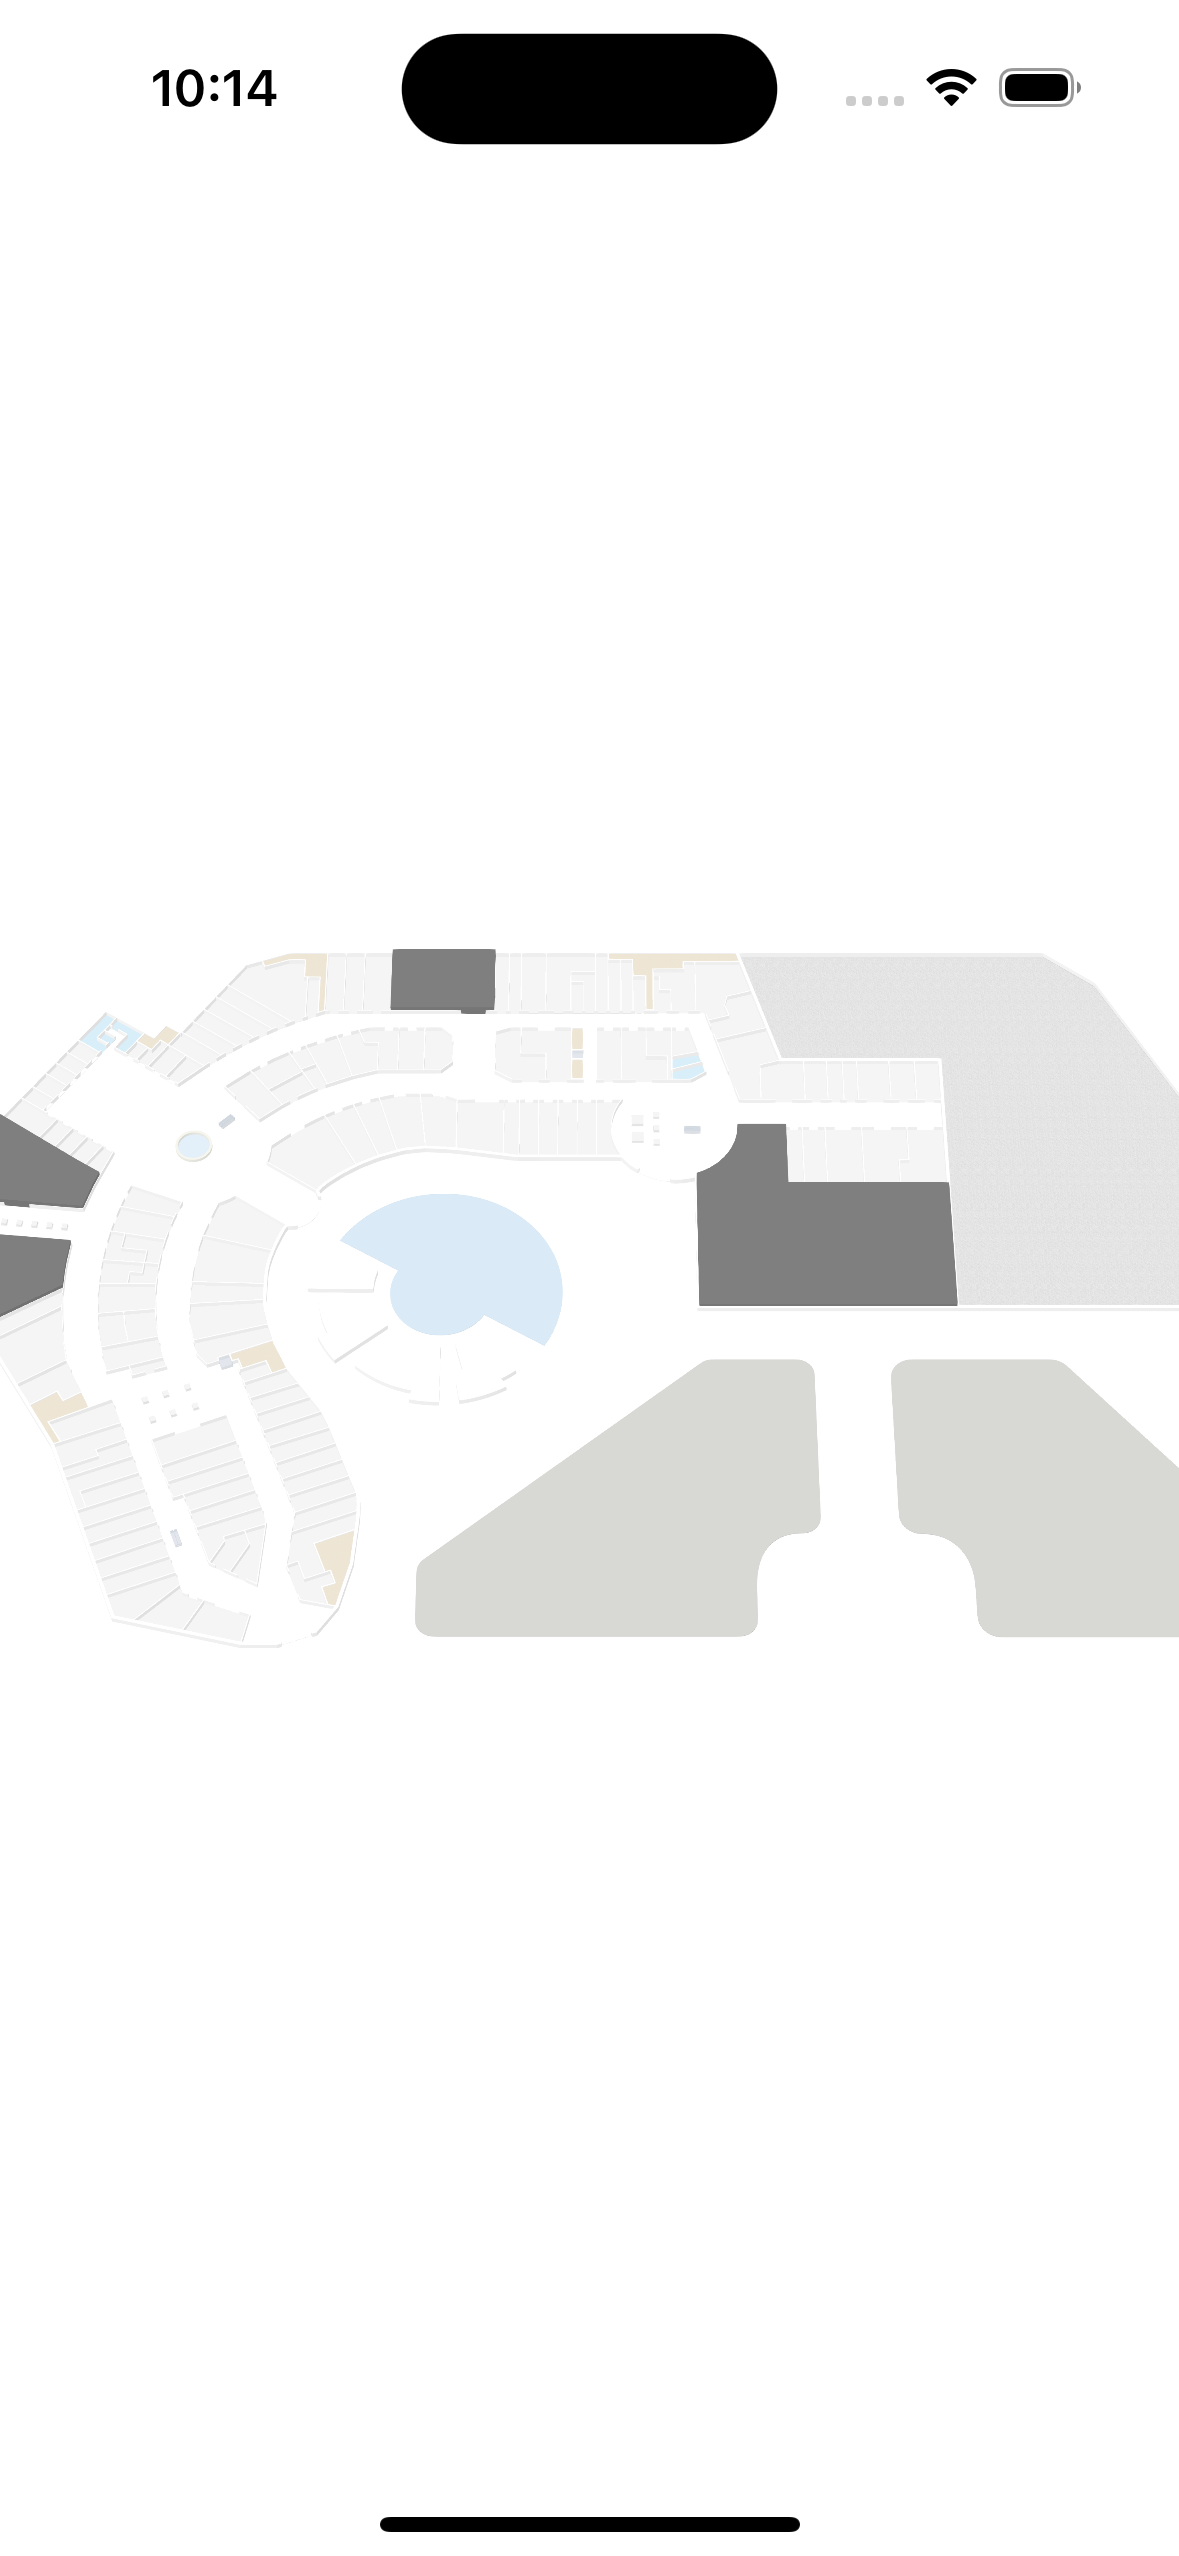 An indoor map shown in an iOS emulator.